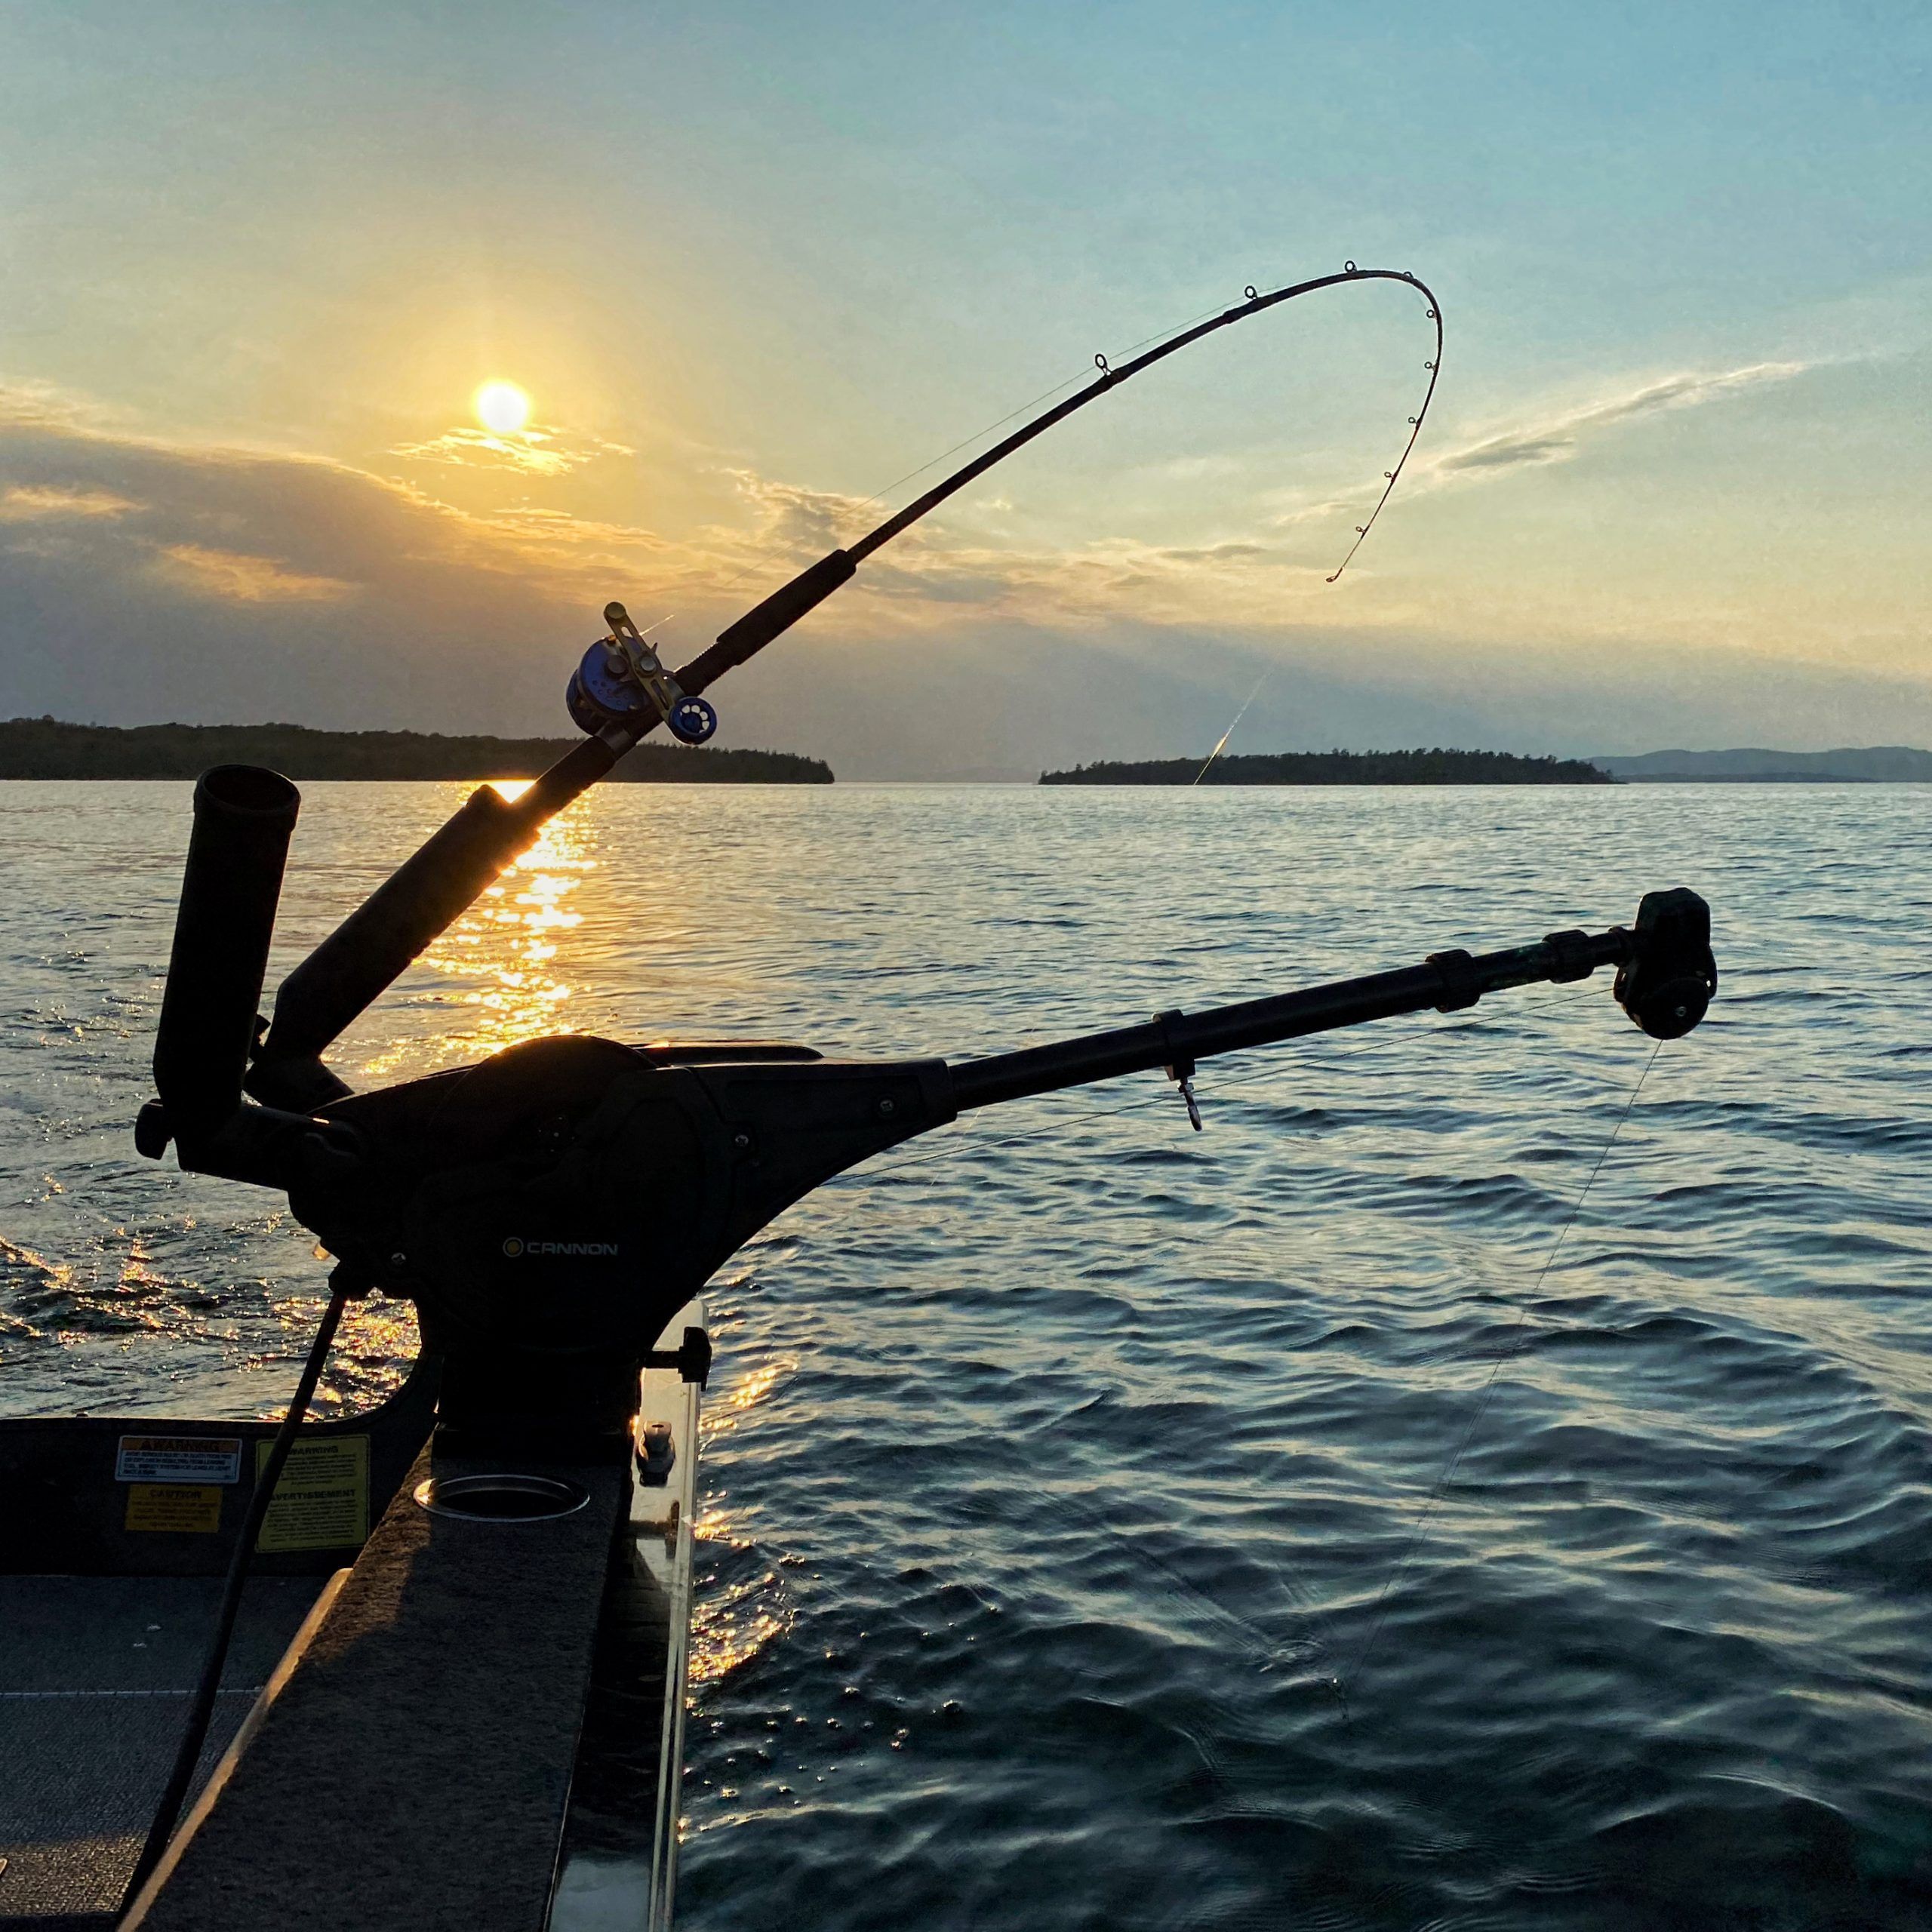 Beginner's (bad) luck? First fishing trip fruitless, but reporter